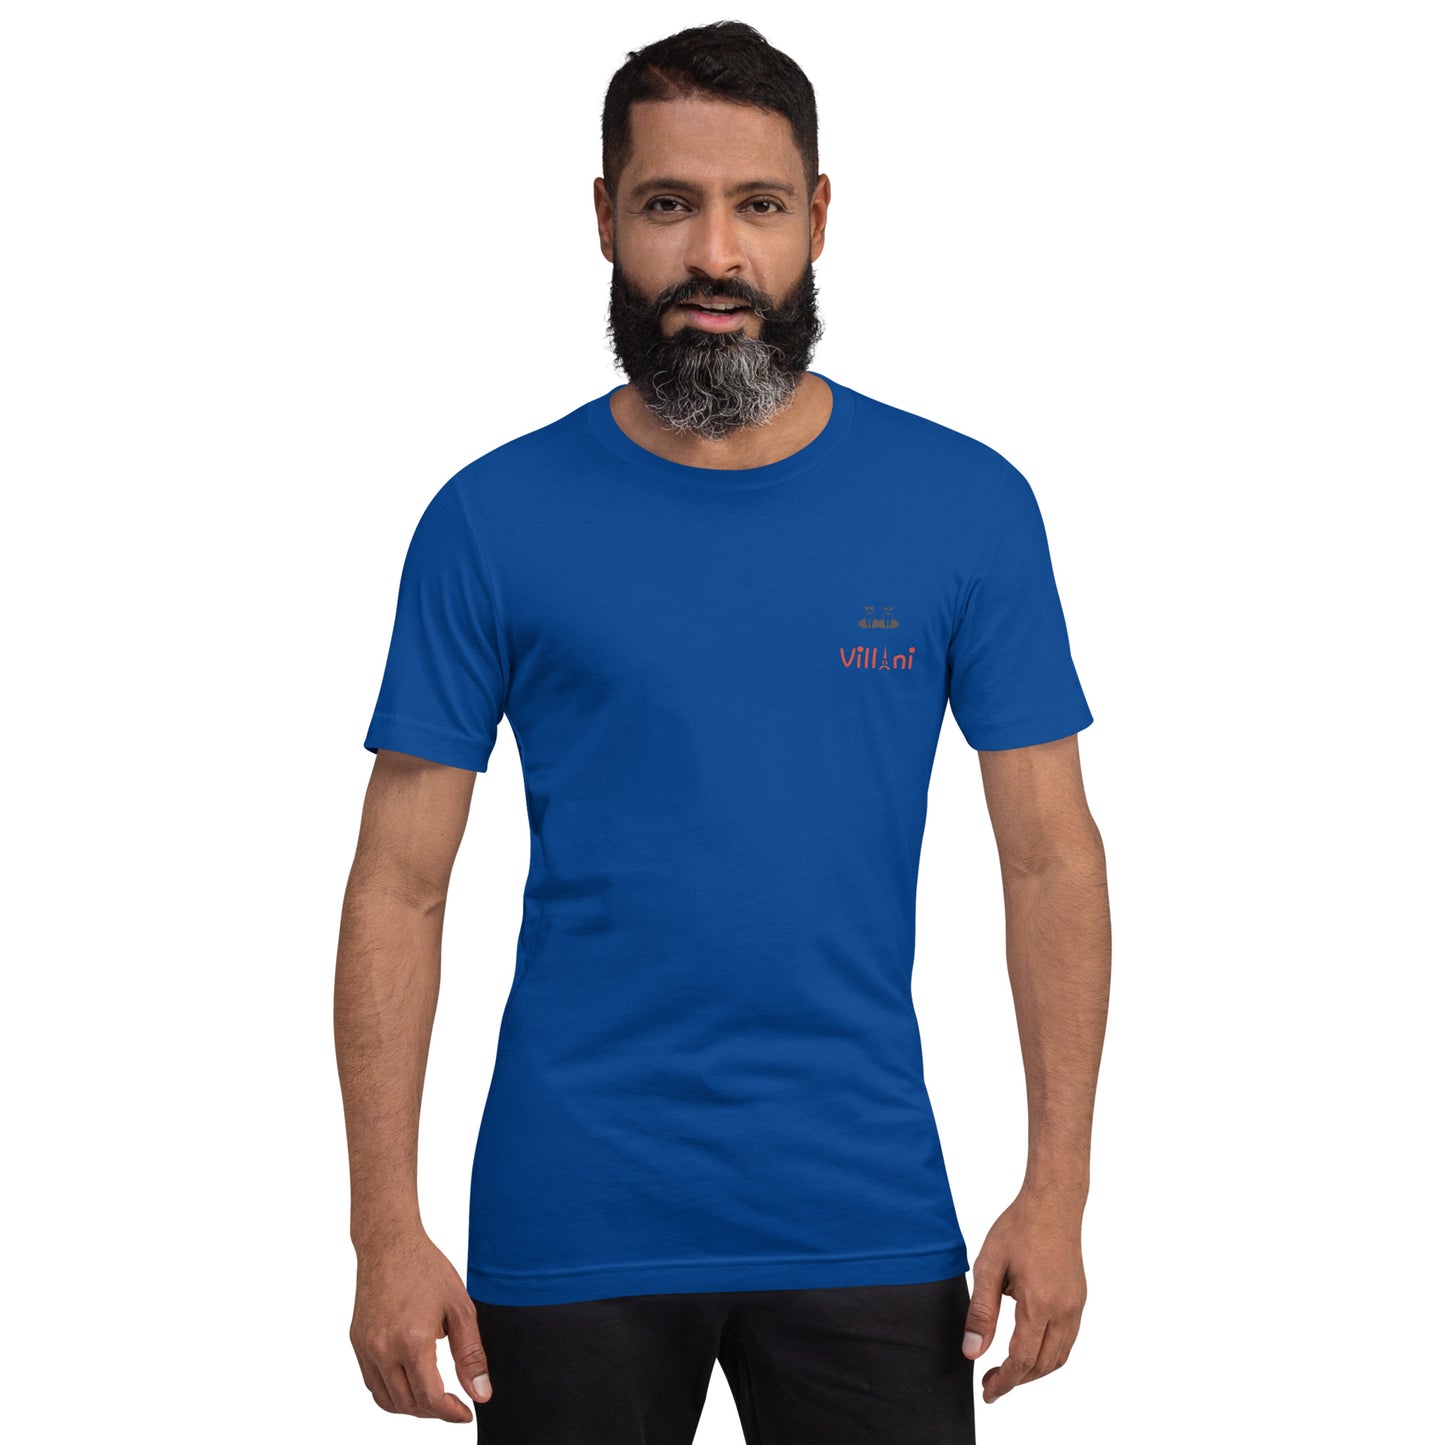 Villani T-Shirt